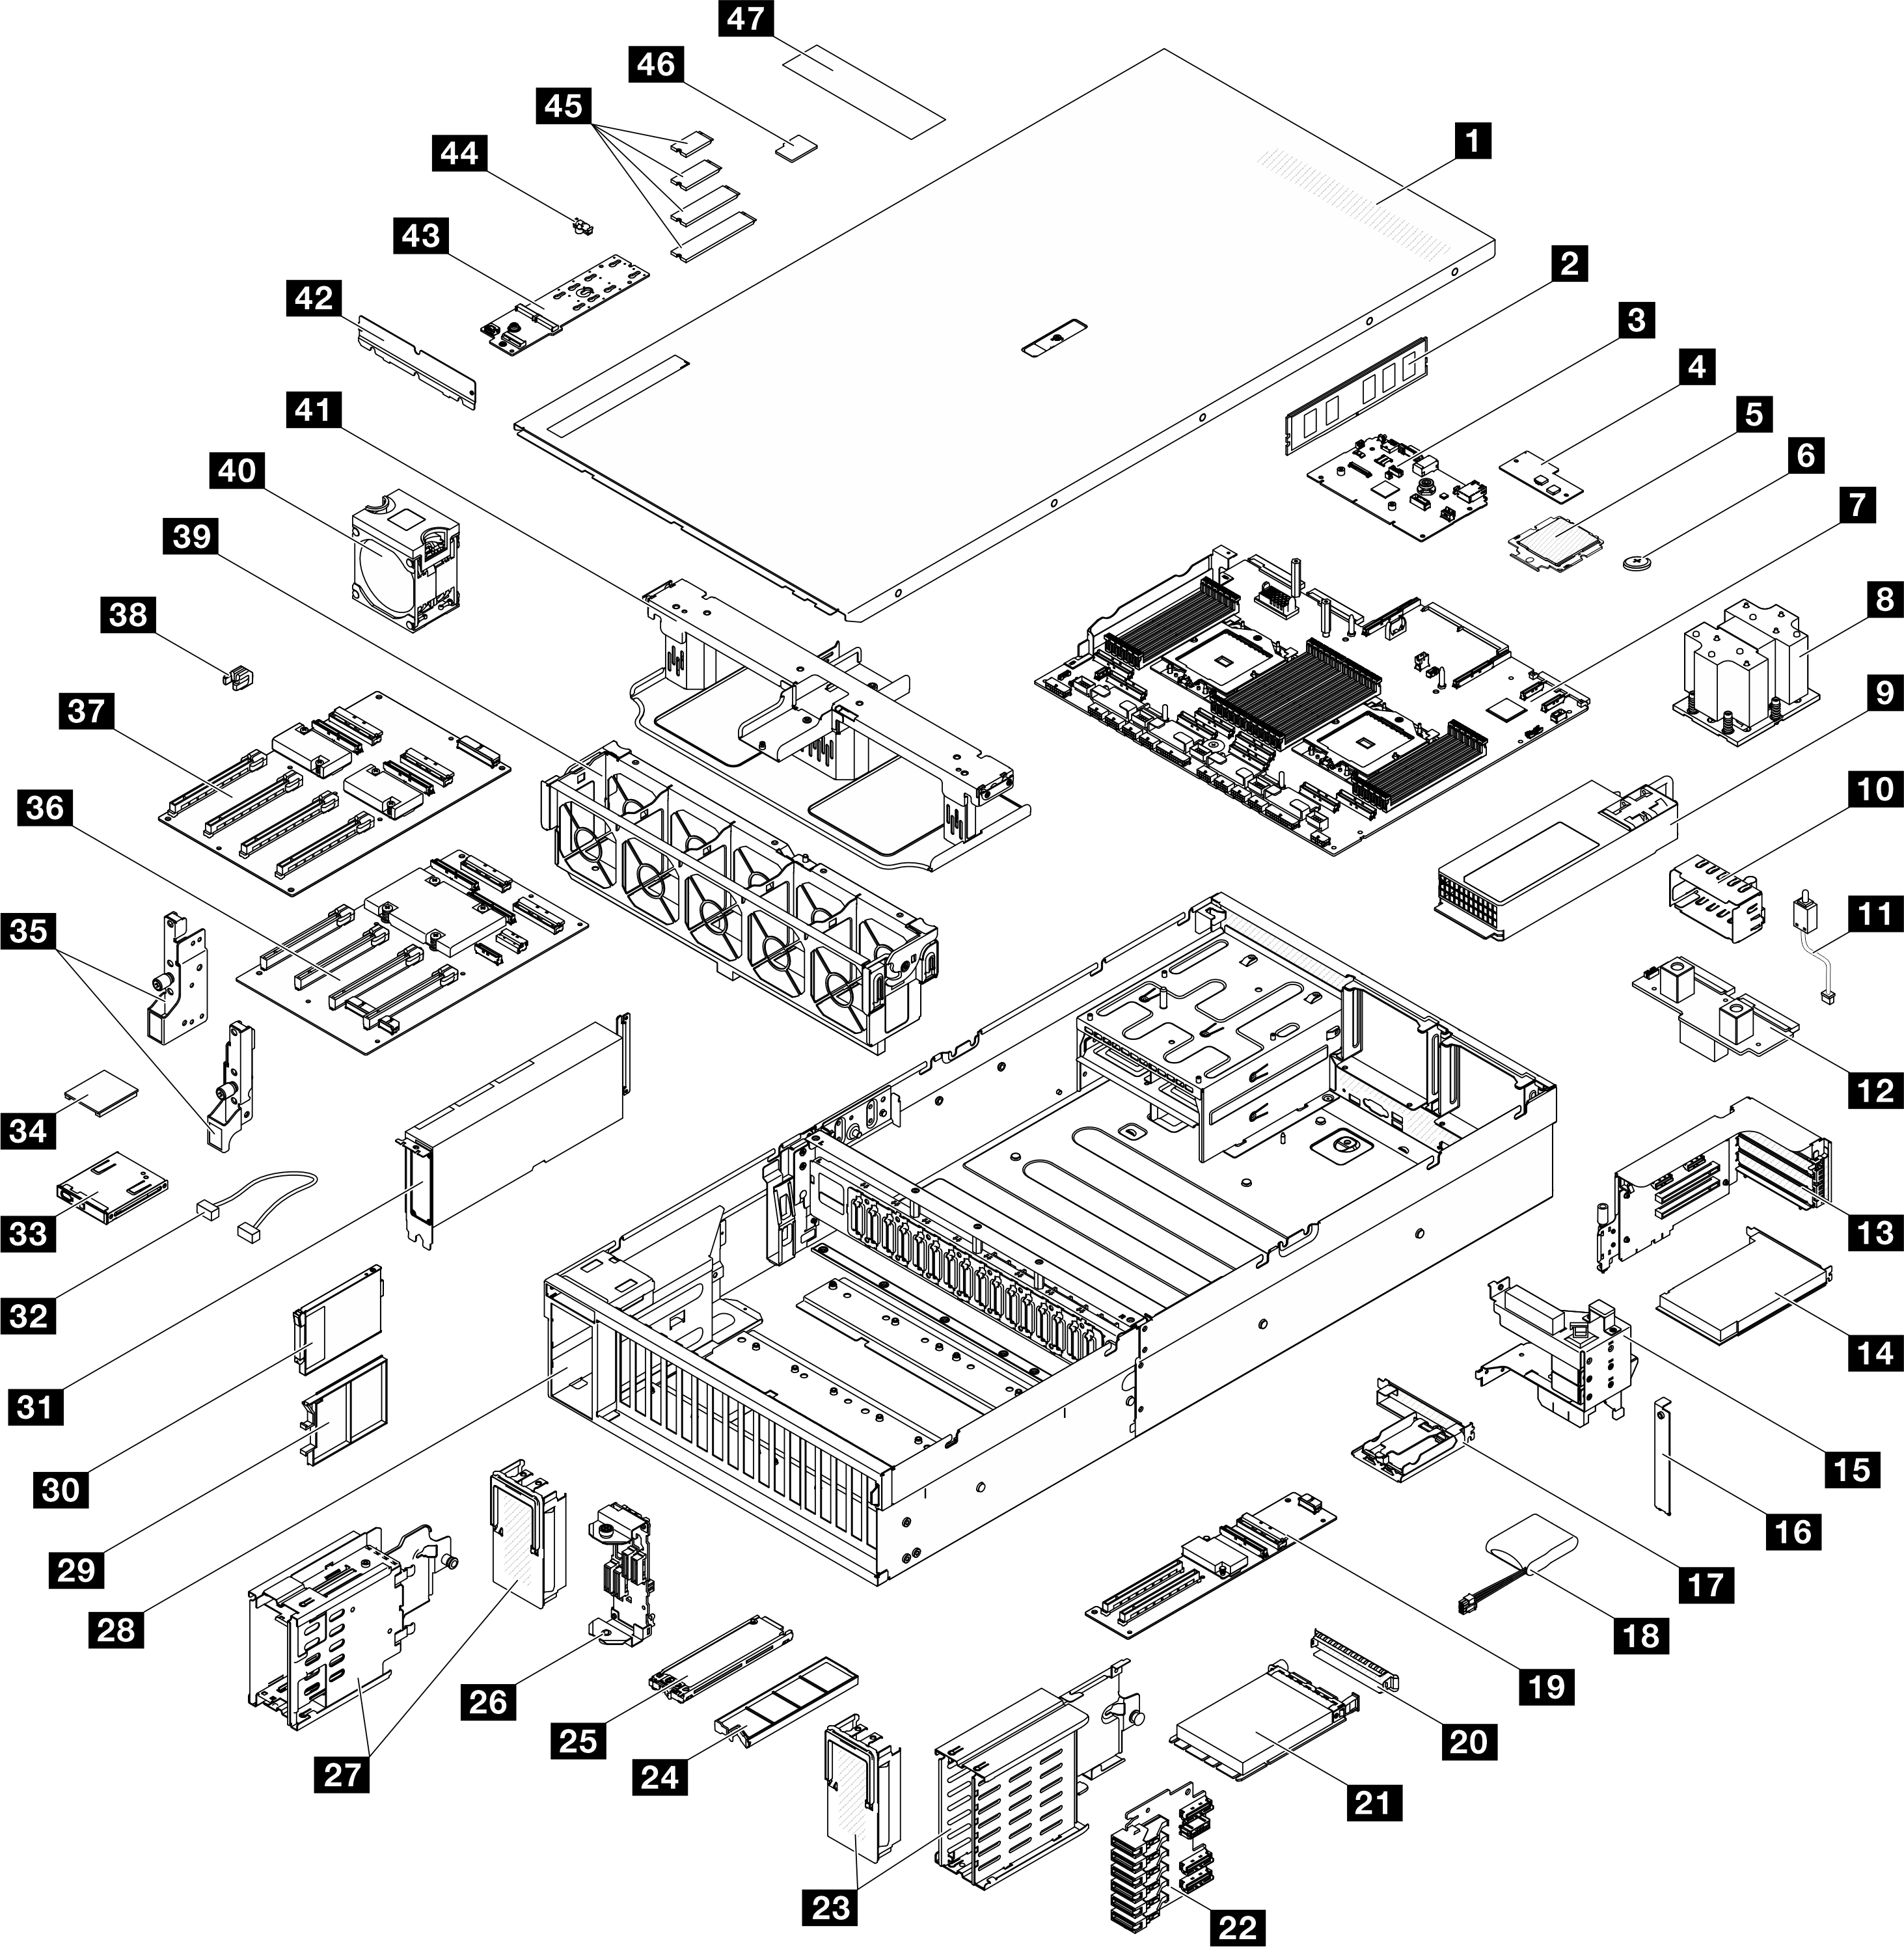 Server components of the Modelo de GPU 8-DW